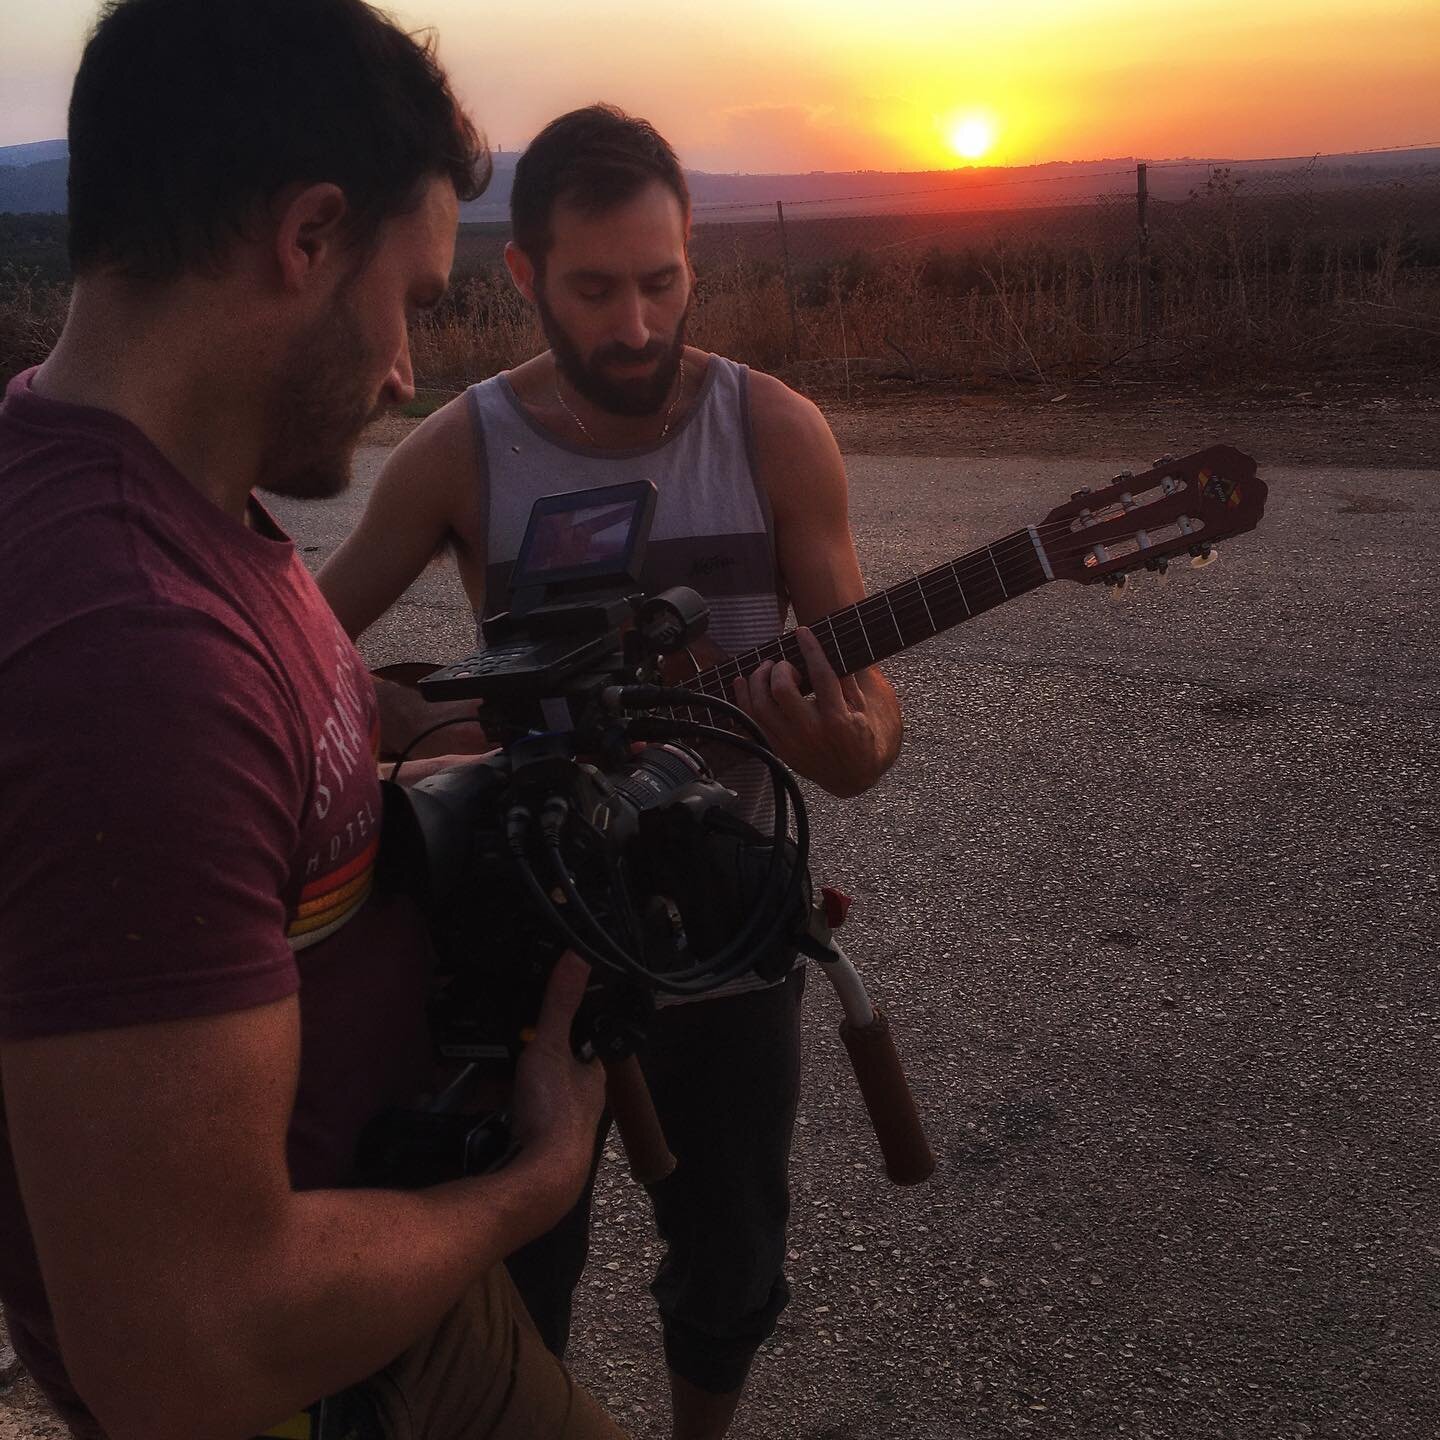 Nazareth 🇮🇱 ❤️ Photo credit @davidadubois 
#dop #setlife🎥 #filmmaking #canon #c300mkii #sunset #israel #nazareth